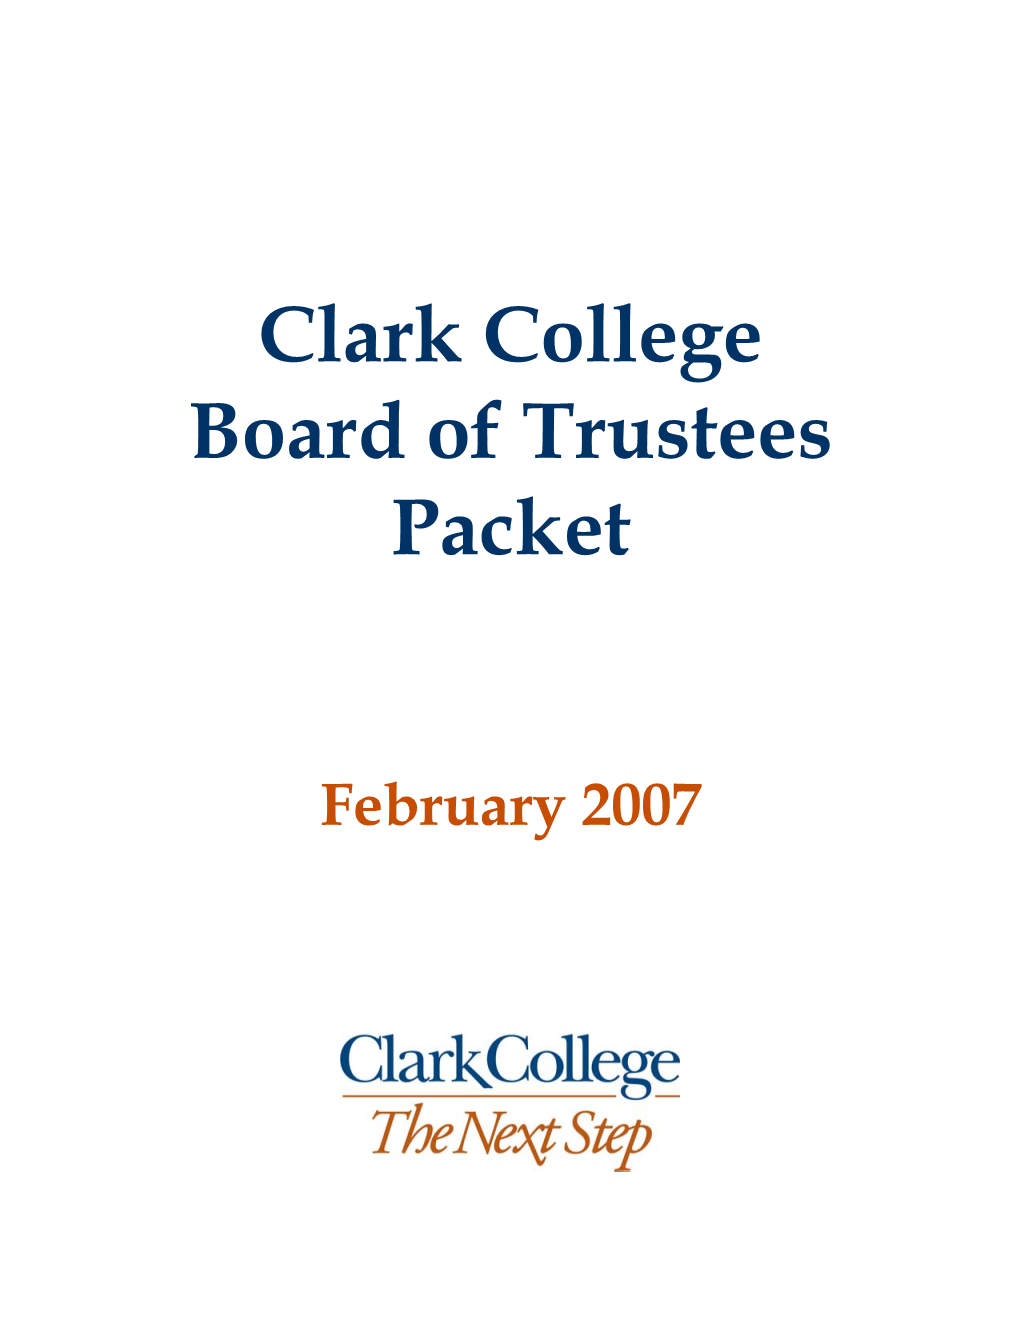 Clark College Board of Trustees Packet